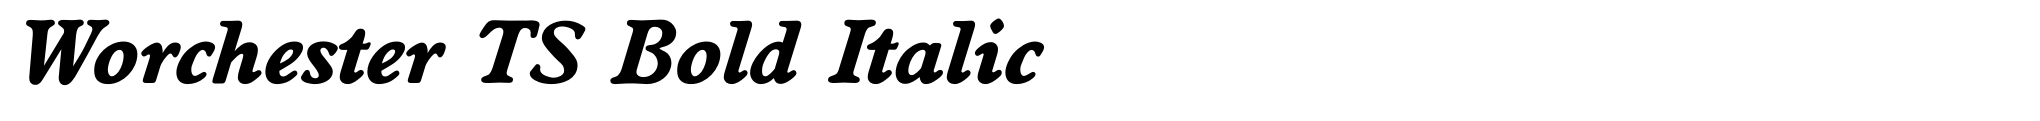 Worchester TS Bold Italic image